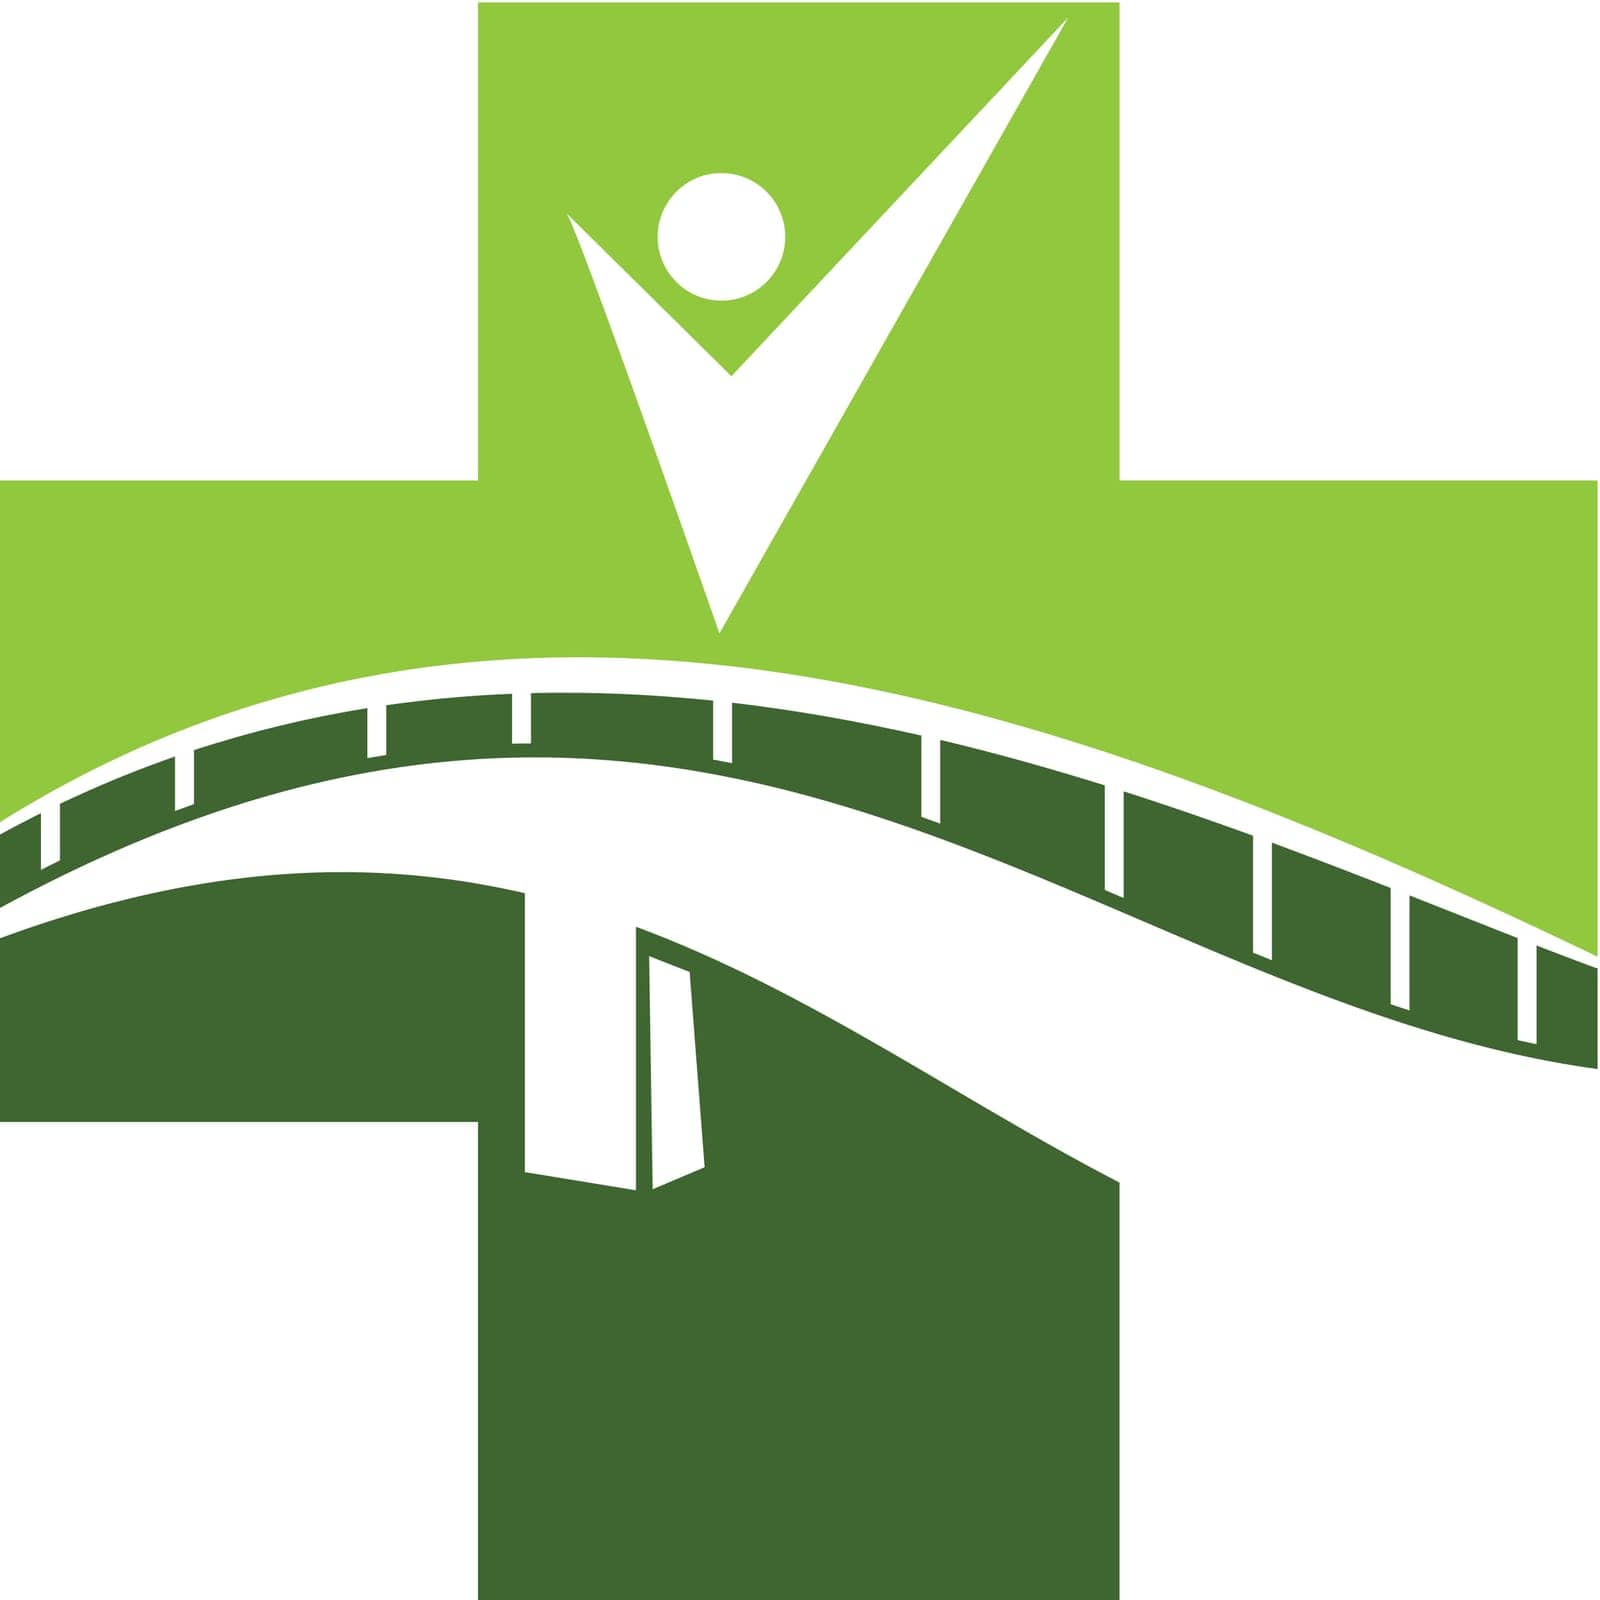 Bridge to Medicine by alluranet